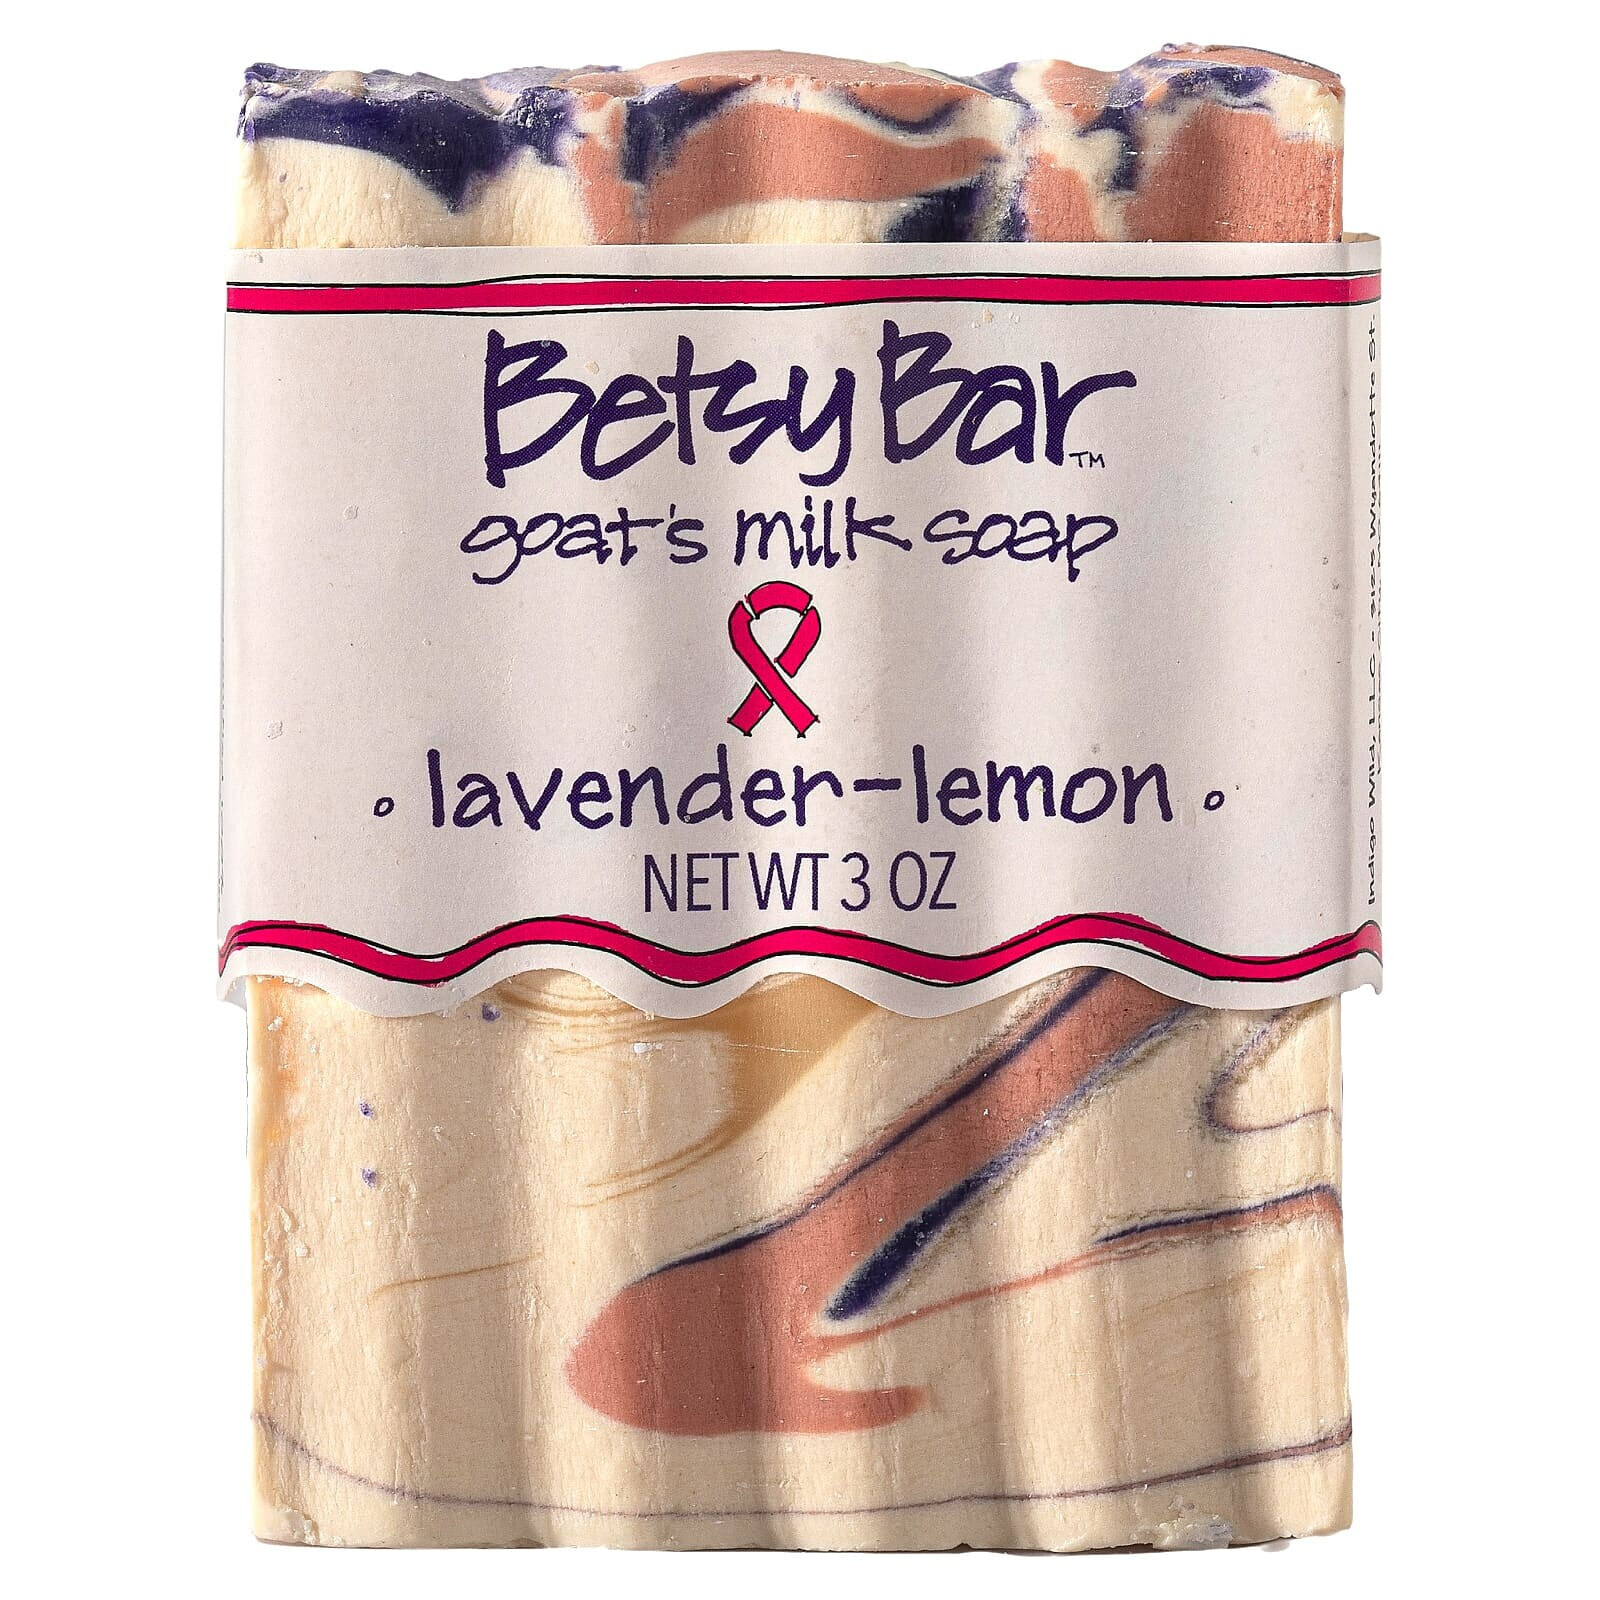 Betsy Bar, Goat's Milk Soap, Lavender-Lemon, 3 oz